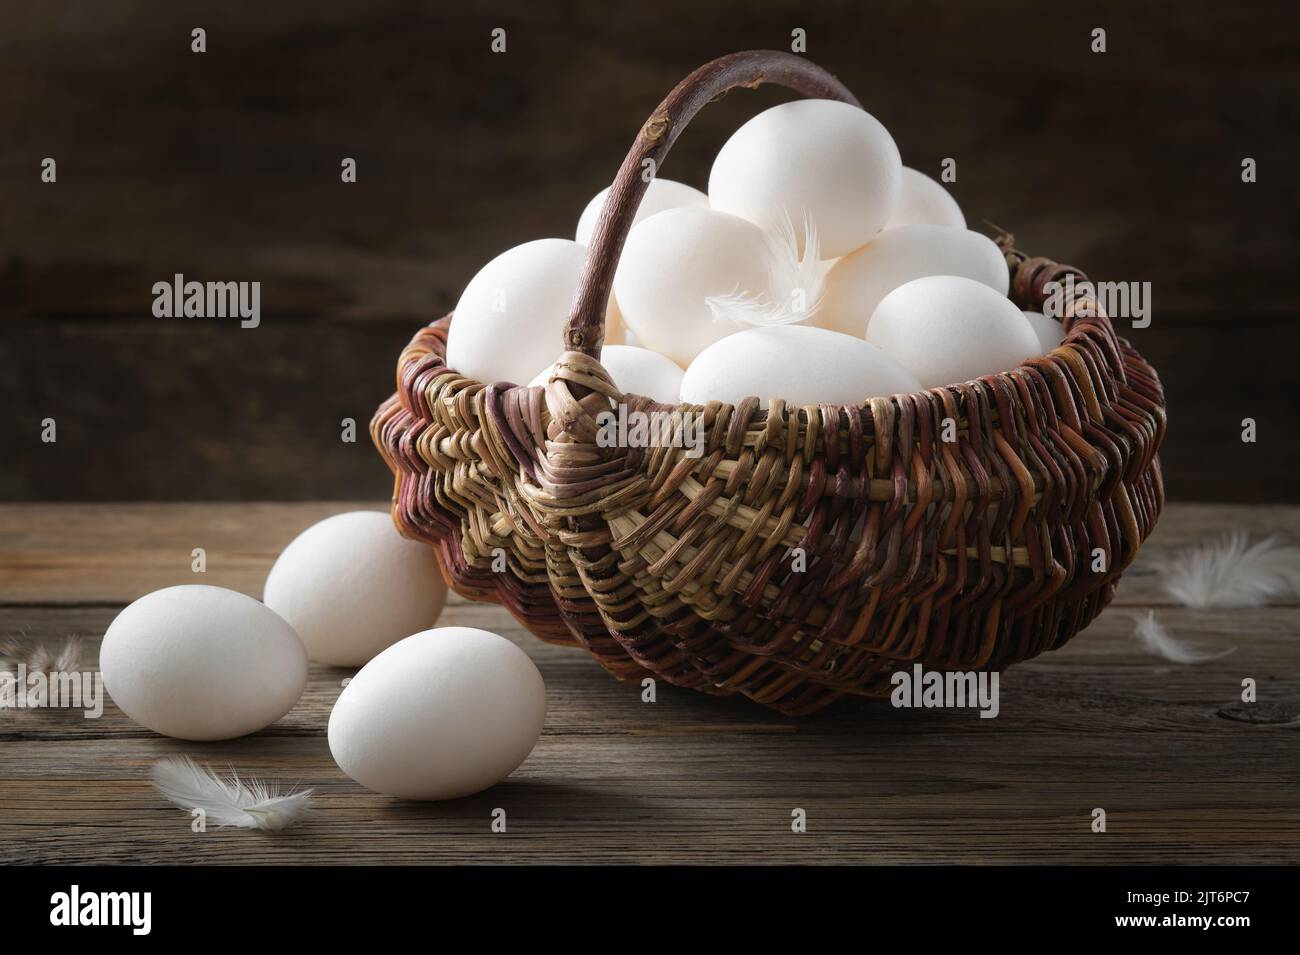 Wicker basket full of white chicken eggs on wooden table. Stock Photo